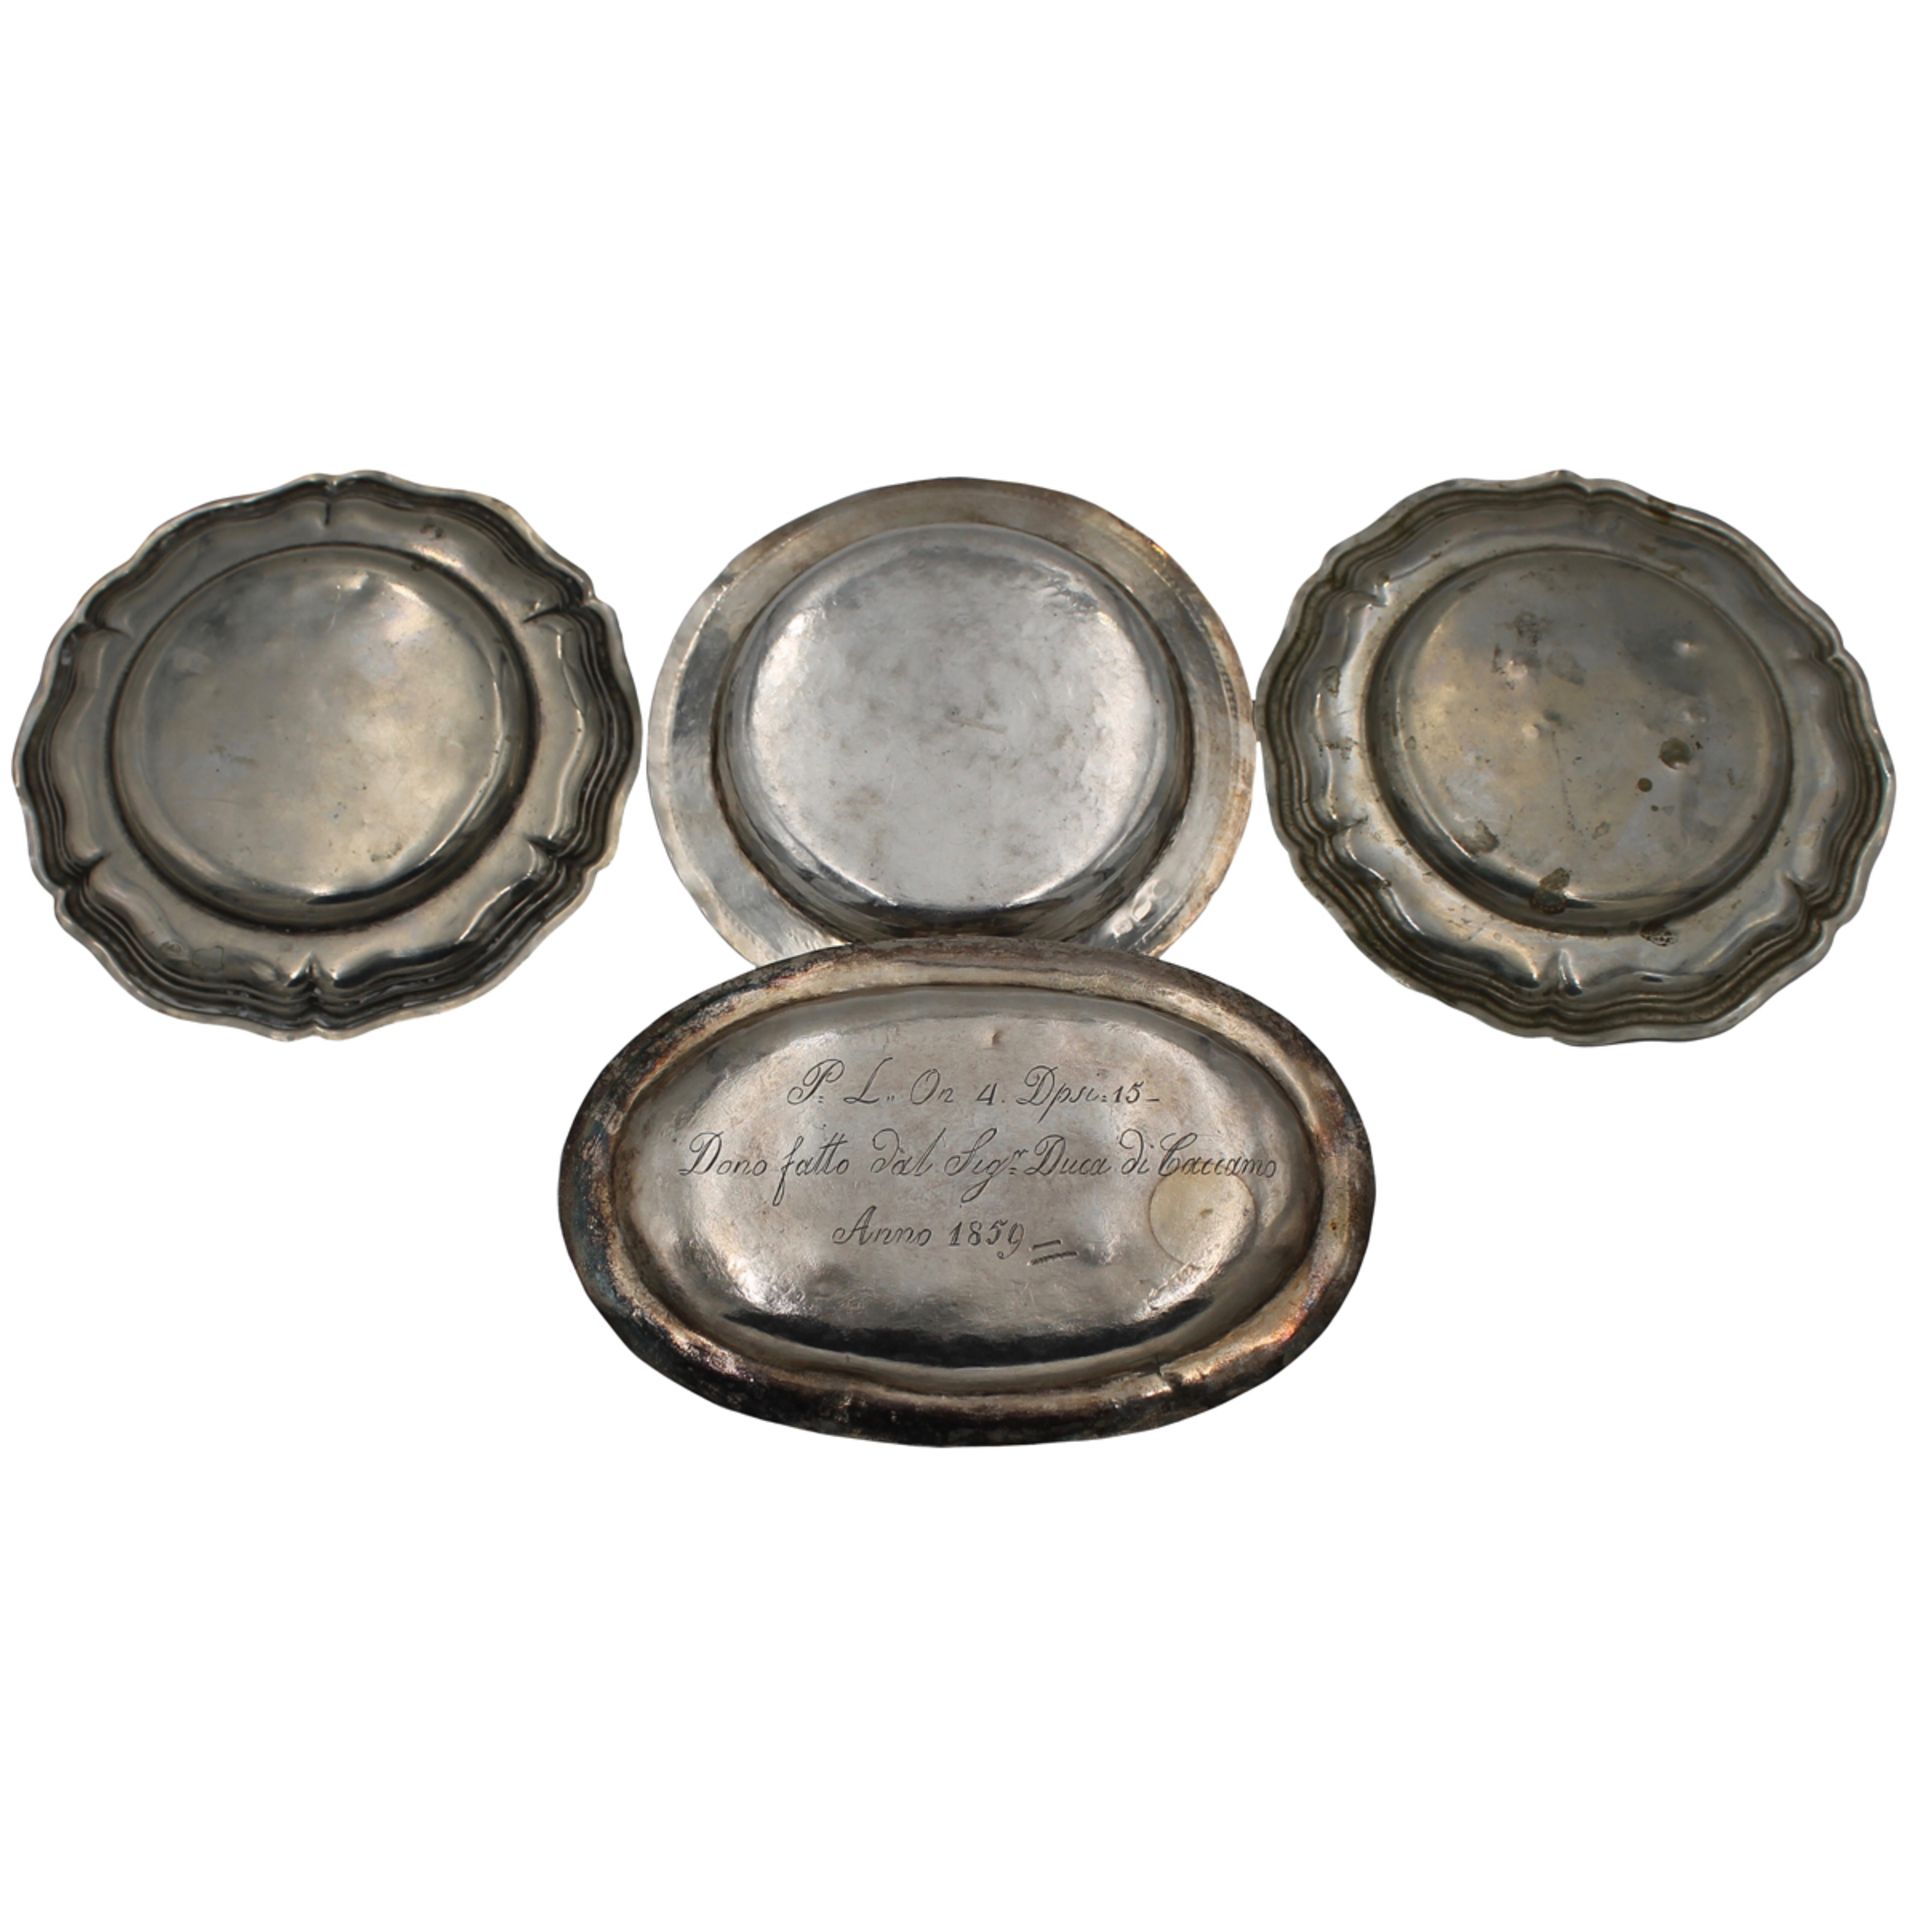 Otto piccoli vassoi e una saliera - Eight small trays and a salt shaker - Image 3 of 4